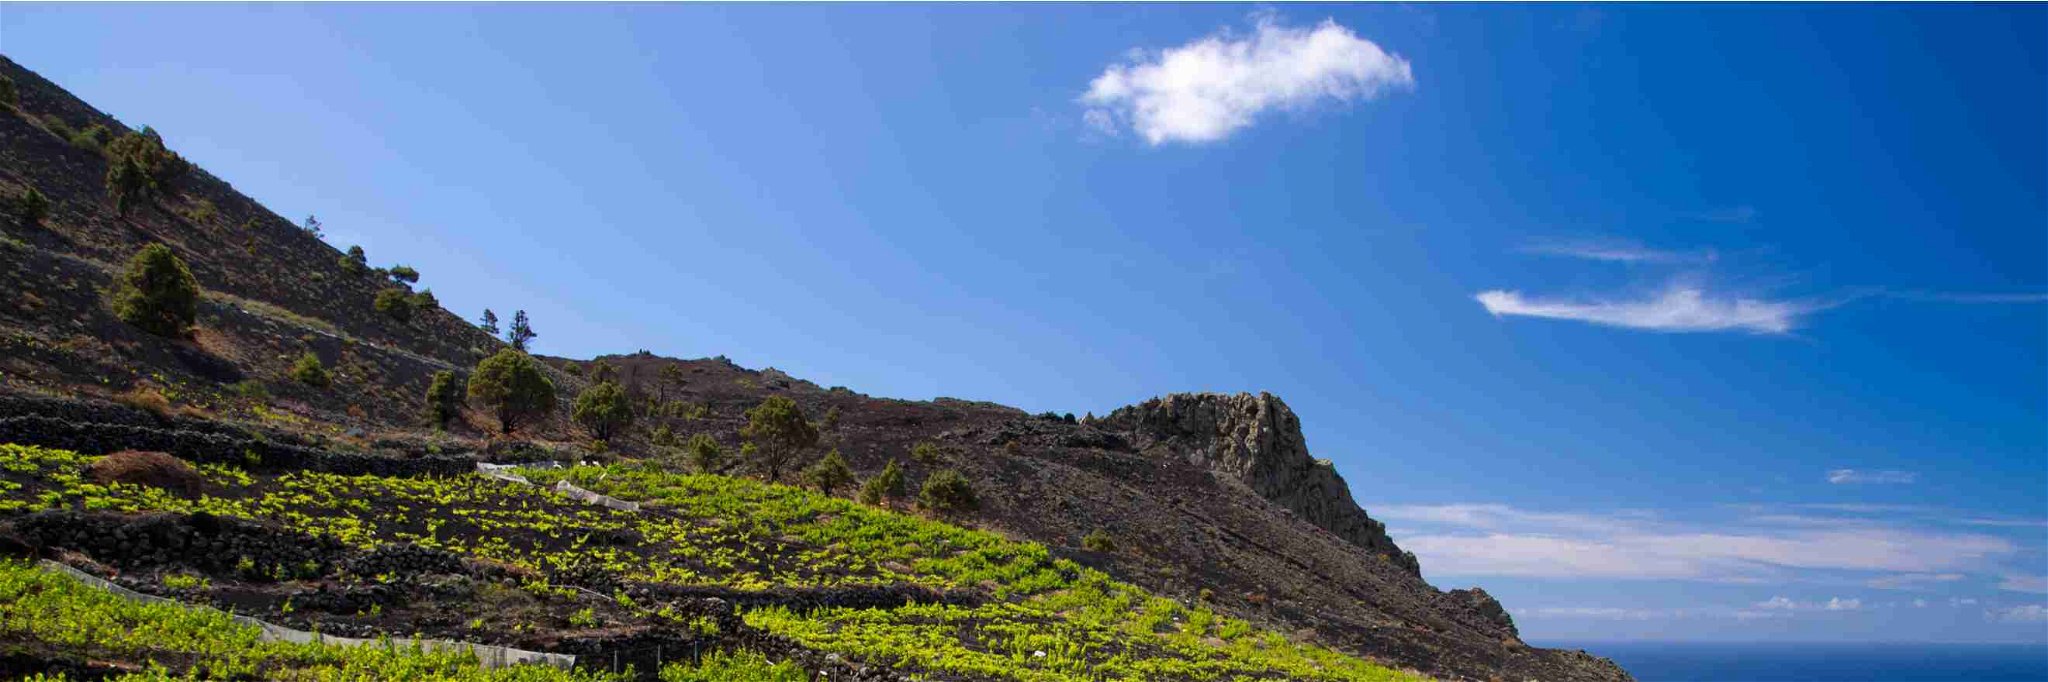 Volcanic vineyards on the Island of La Palma